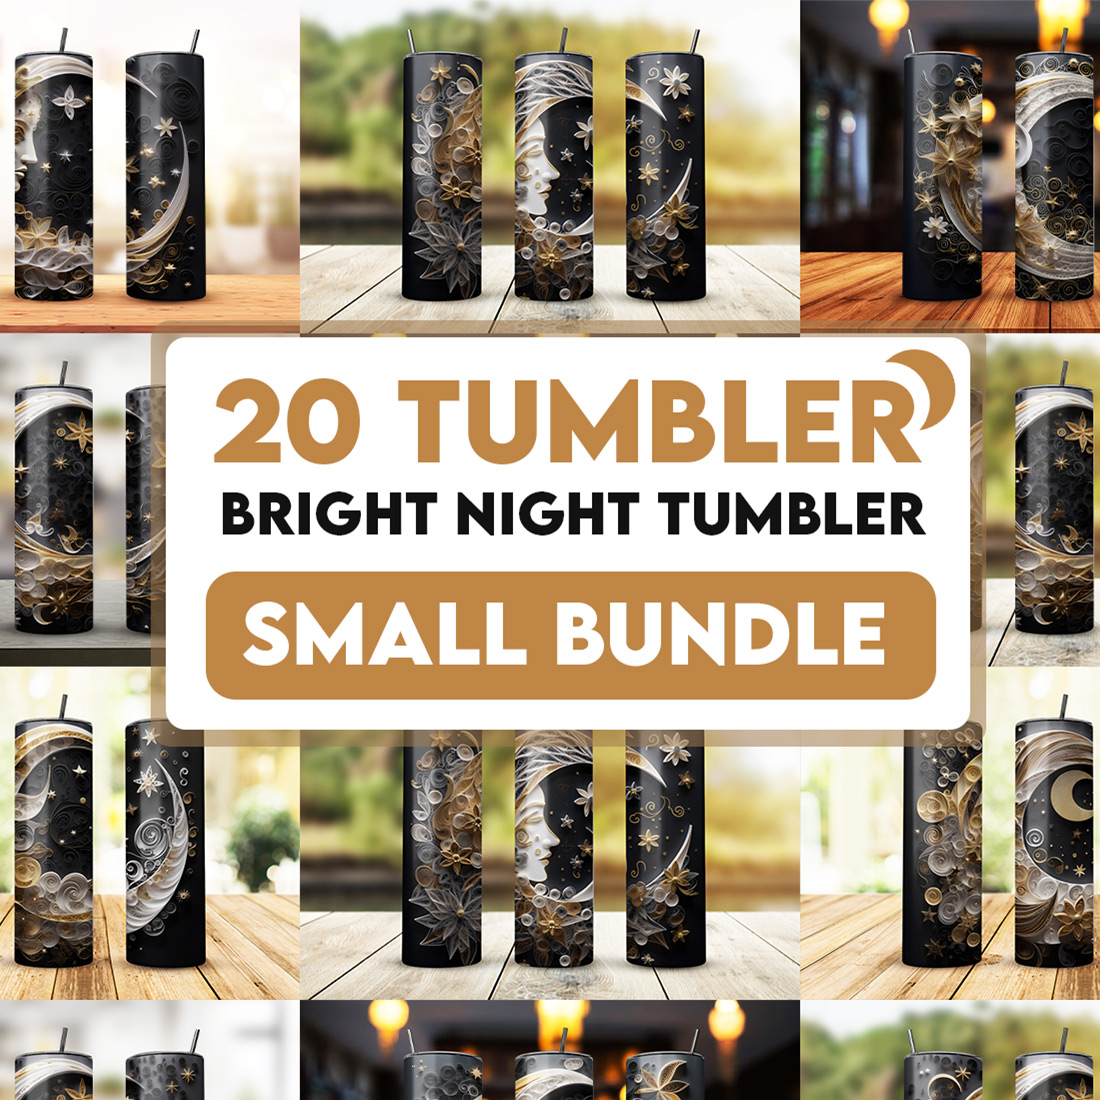 Bright Night Tumbler cover image.